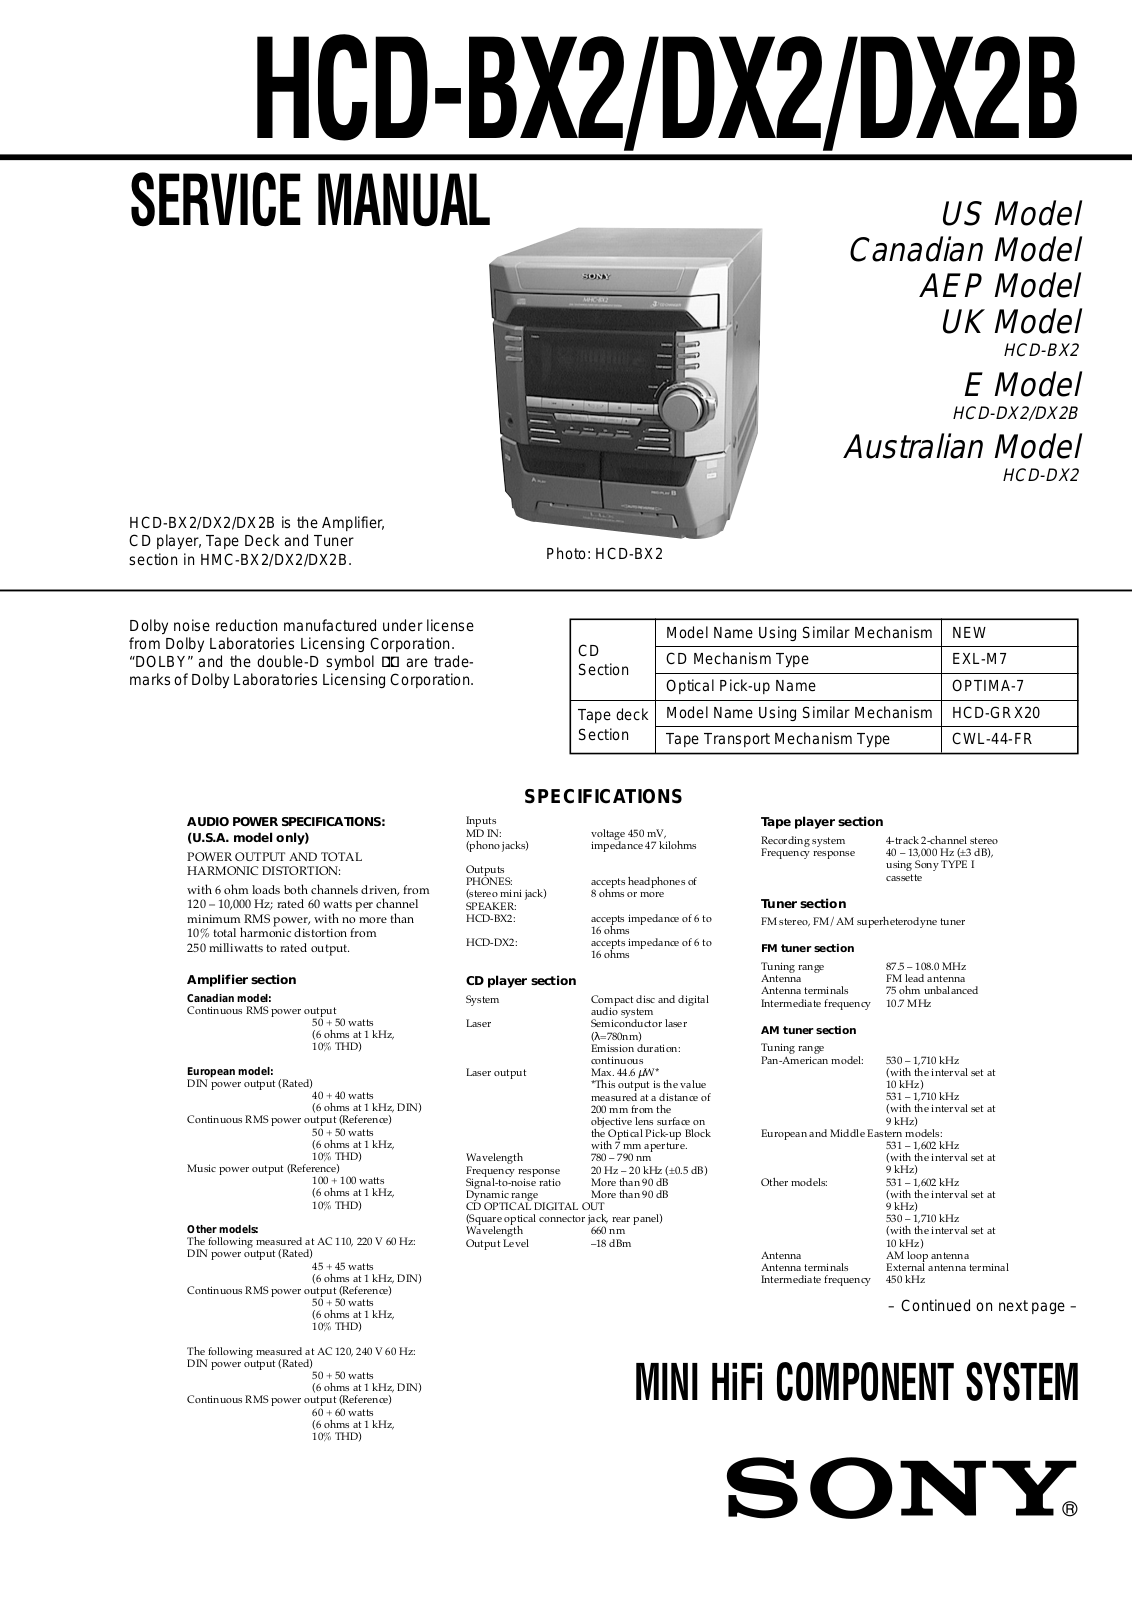 SONY HCD BX2, HCD DX2, HCD DX2B Service Manual